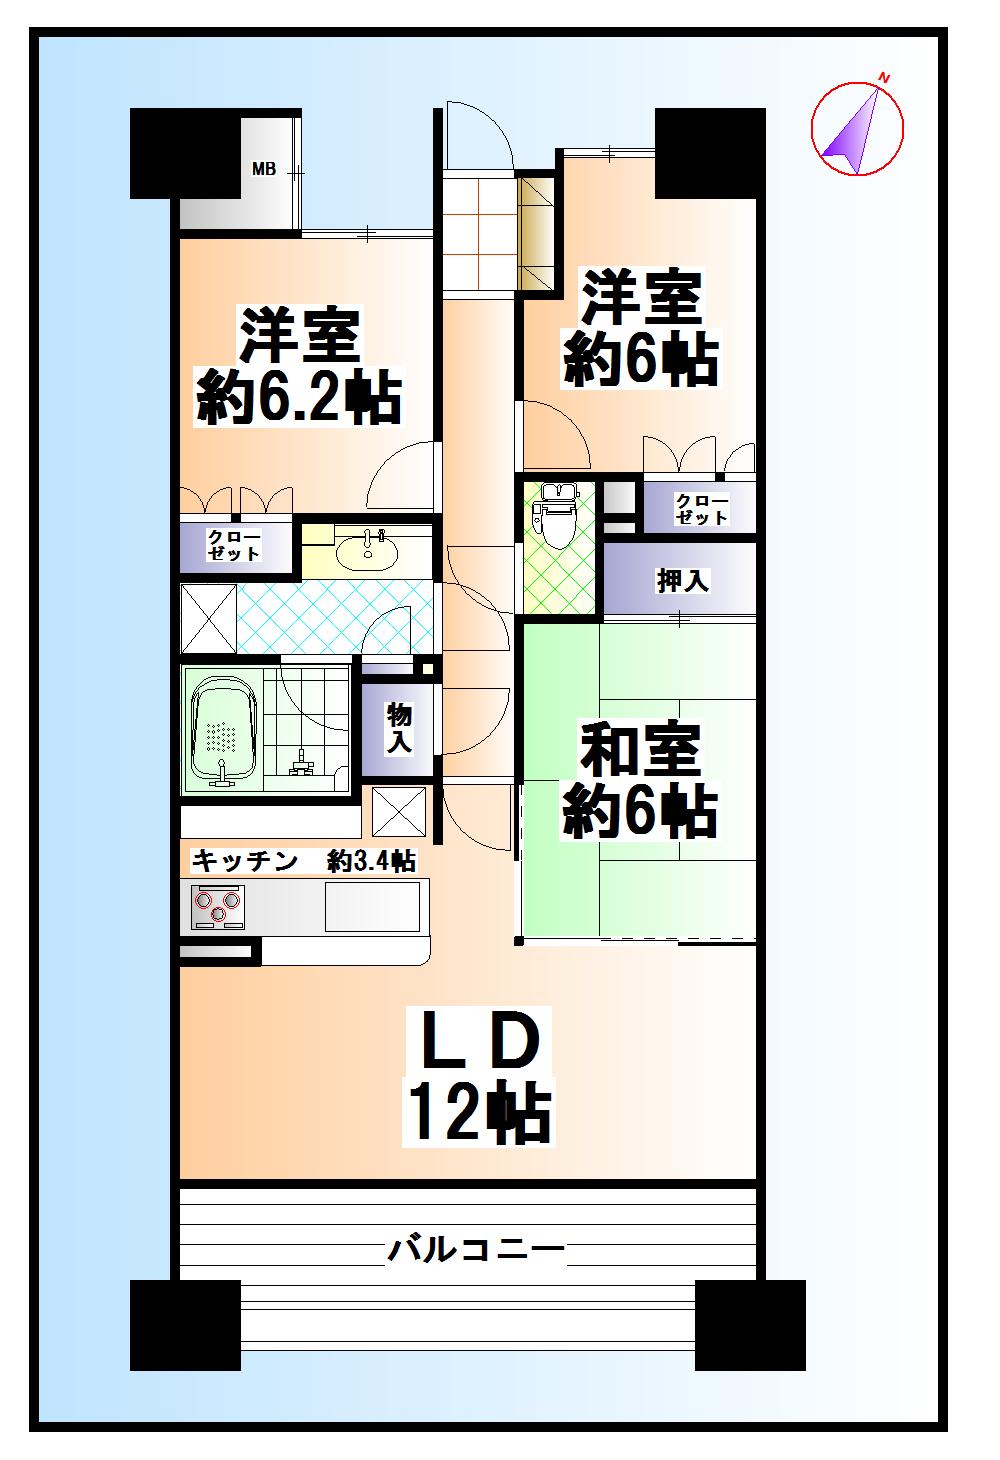 Floor plan. 3LDK, Price 31,800,000 yen, Occupied area 75.27 sq m , Balcony area 13.2 sq m